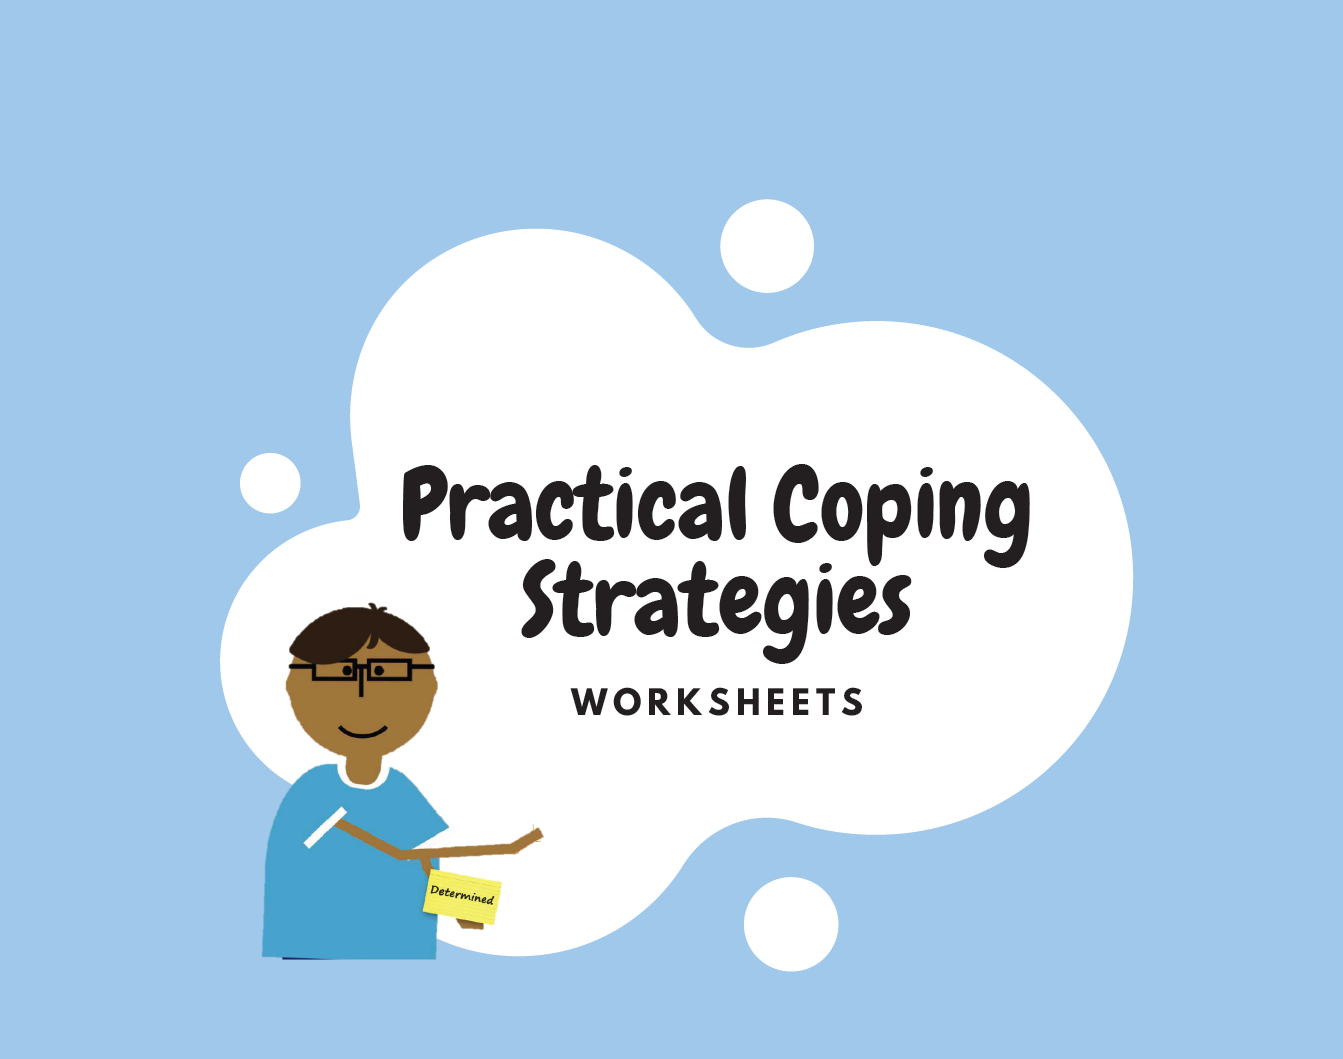 Develop practical coping strategies 